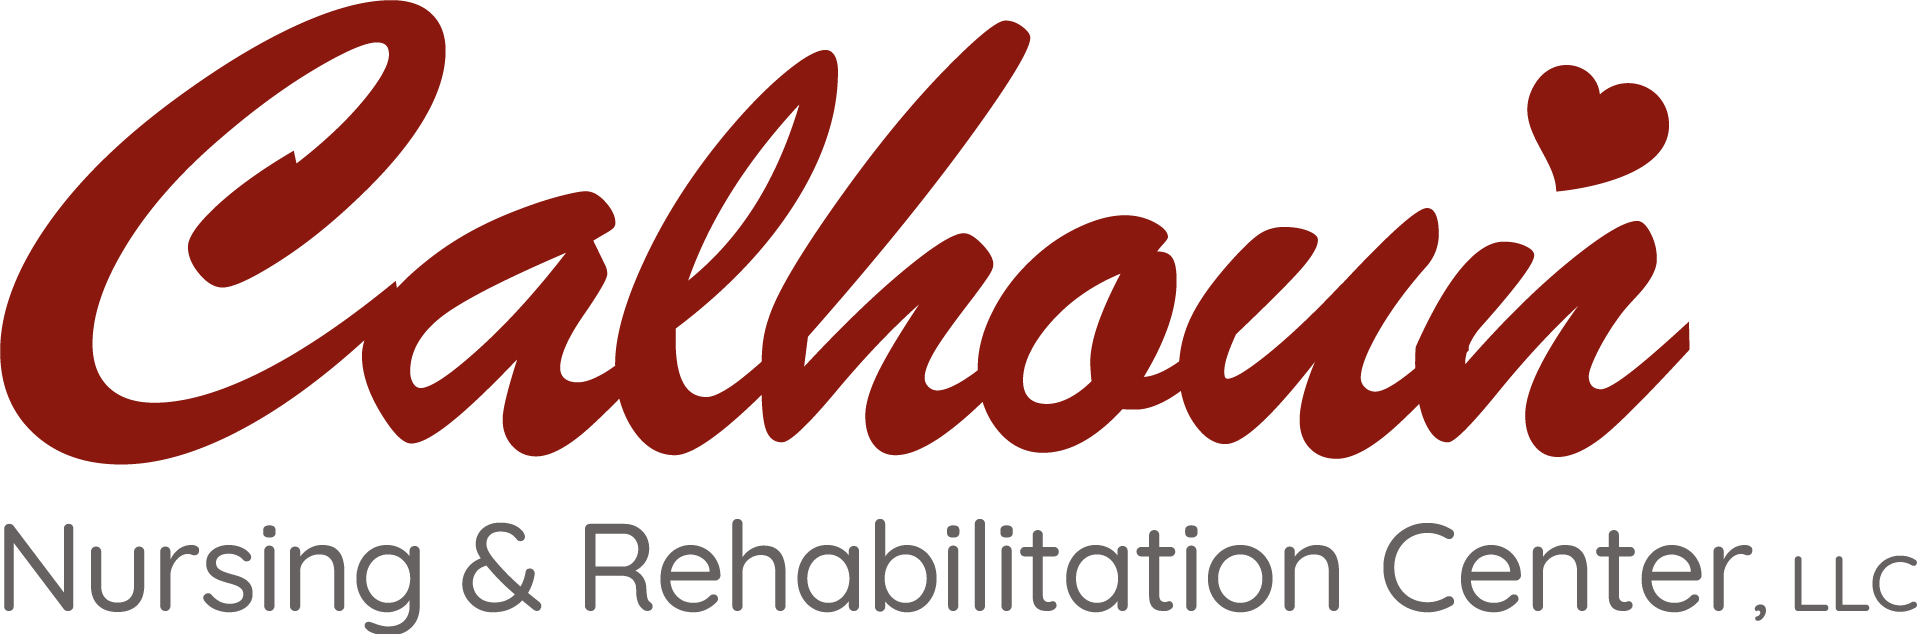 Calhoun Nursing and Rehabilitation Center, LLC